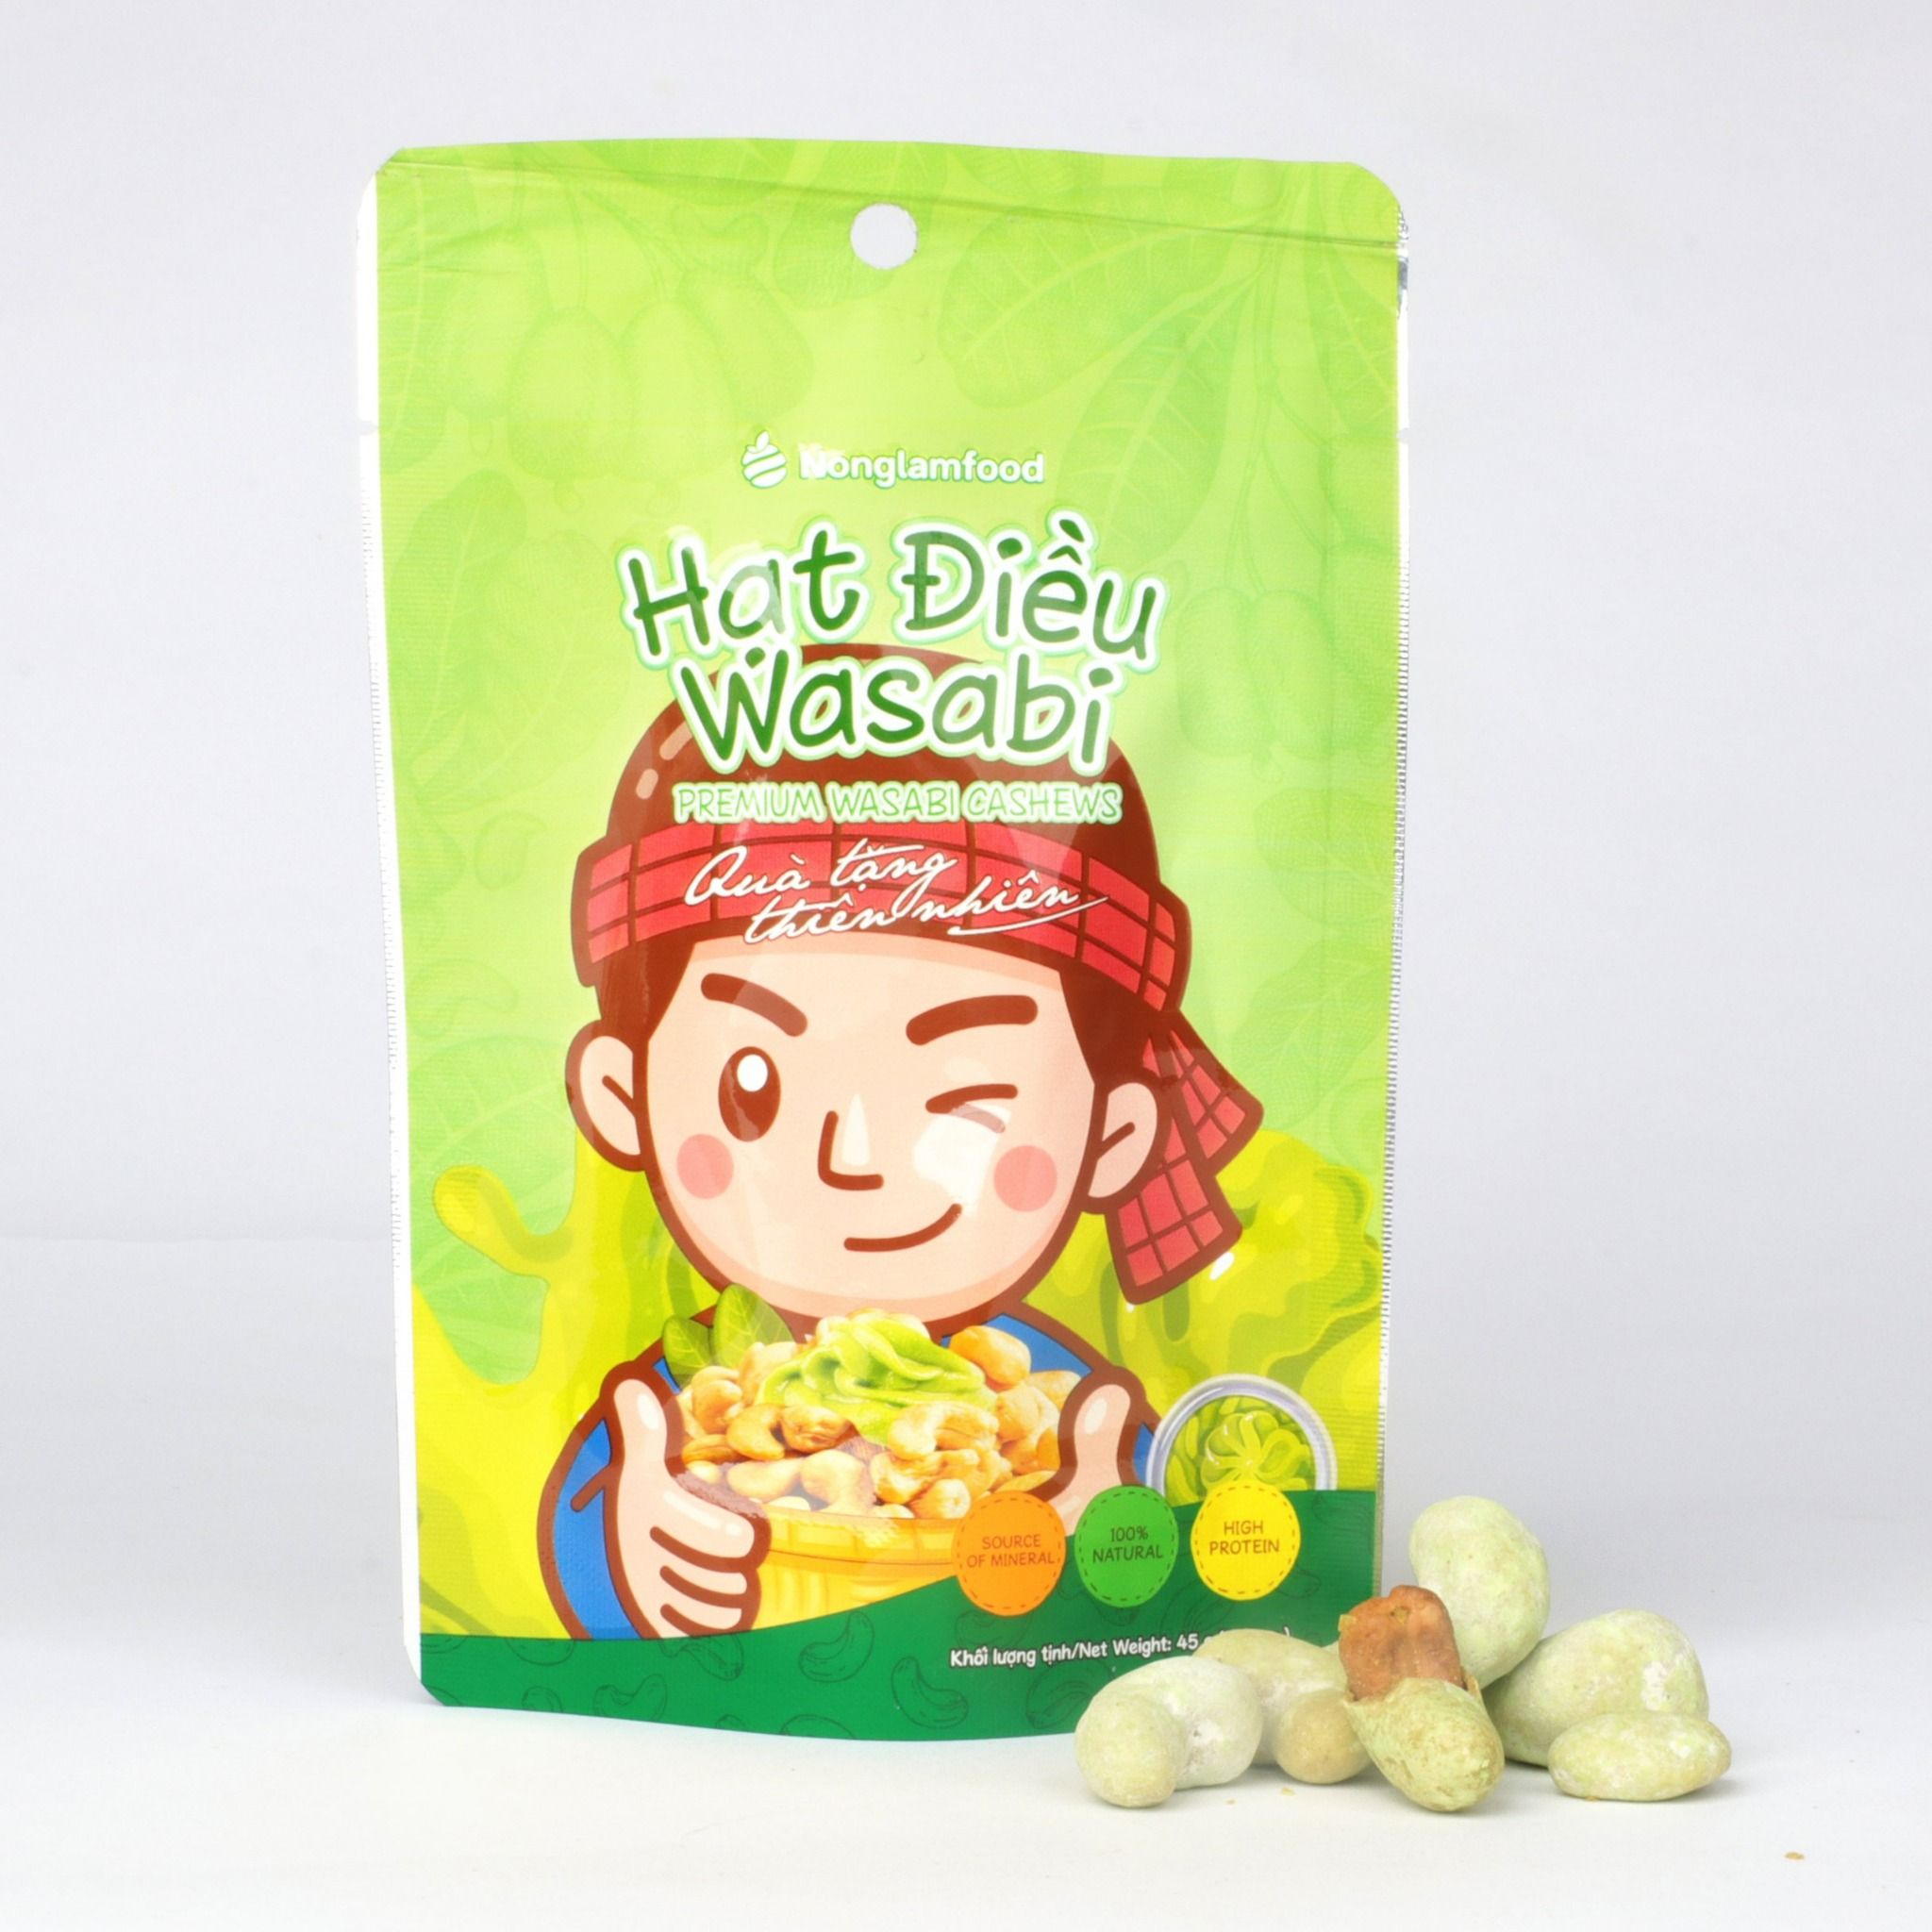 Hạt điều wasabi Nonglamfood túi 45g | Premium wasabi cashews